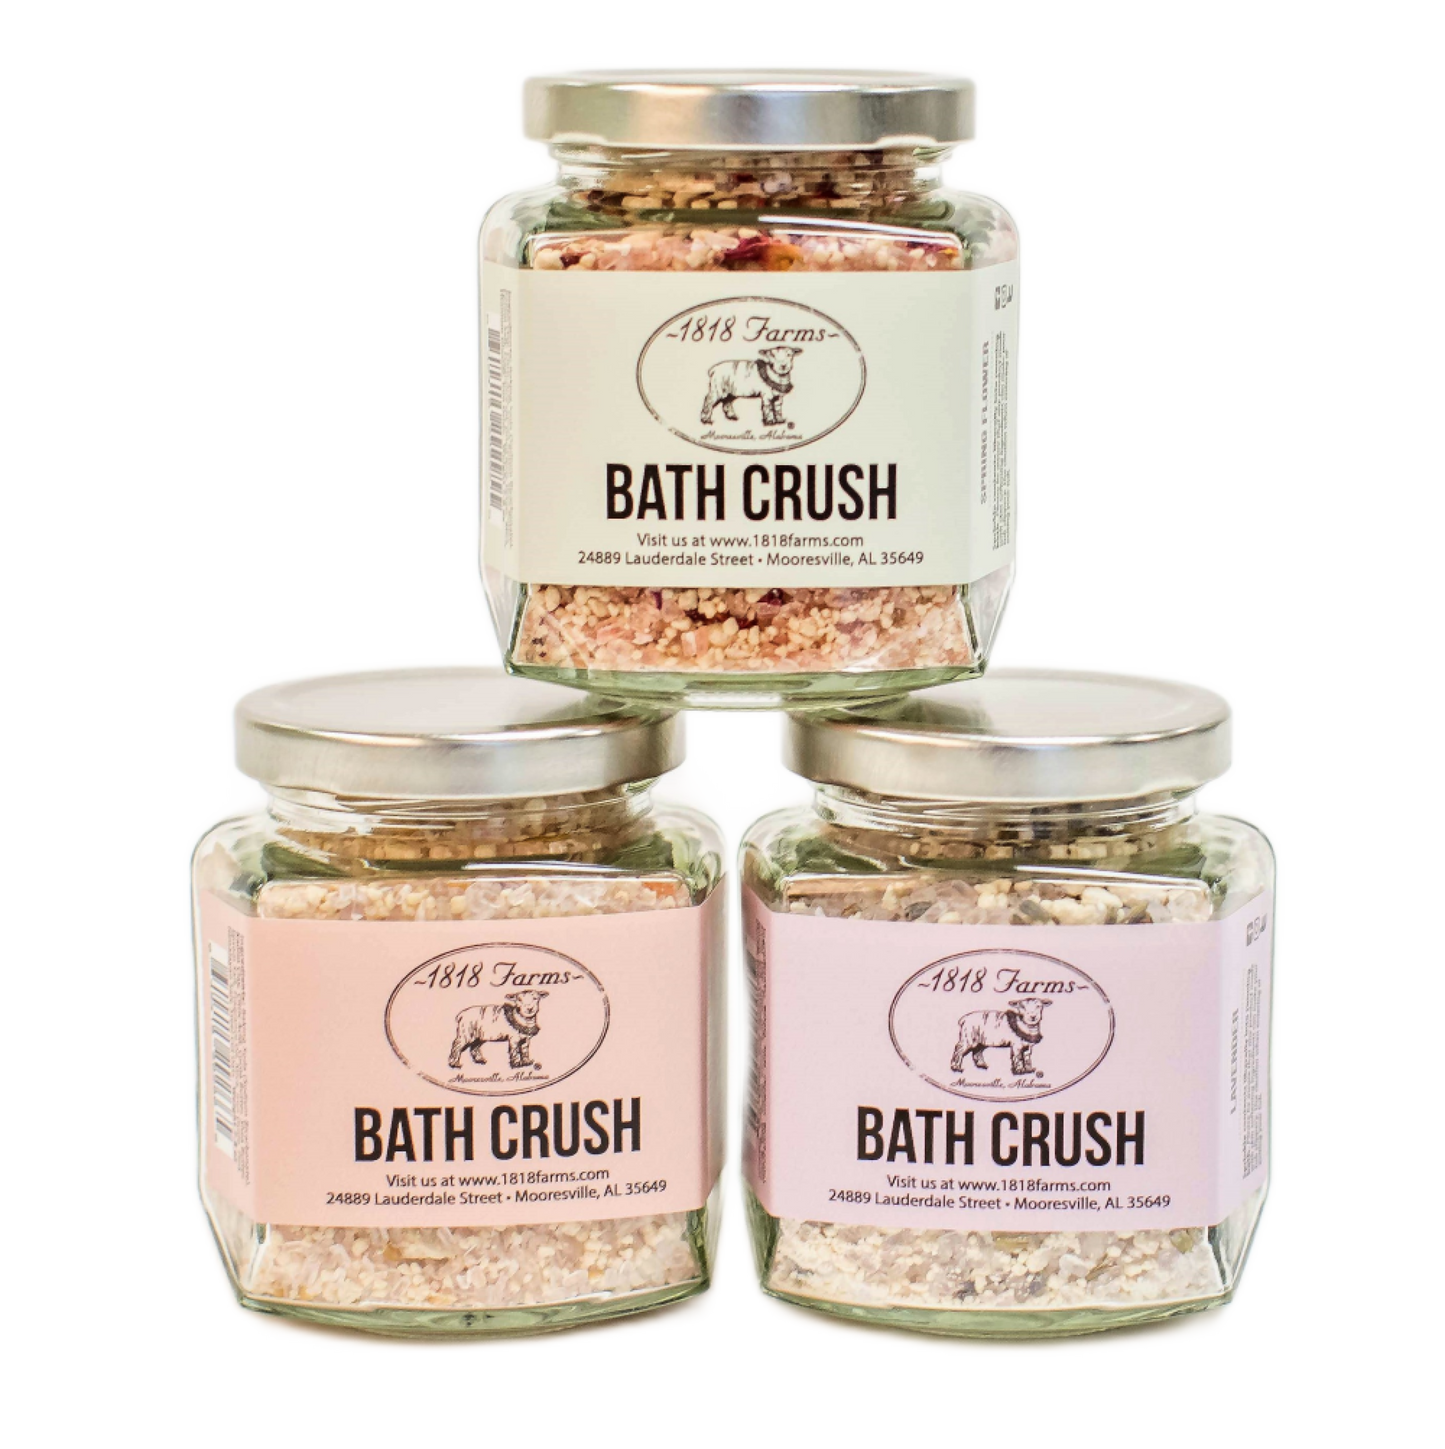 Bath Crush Bath Teas & Truffles 1818 Farms   